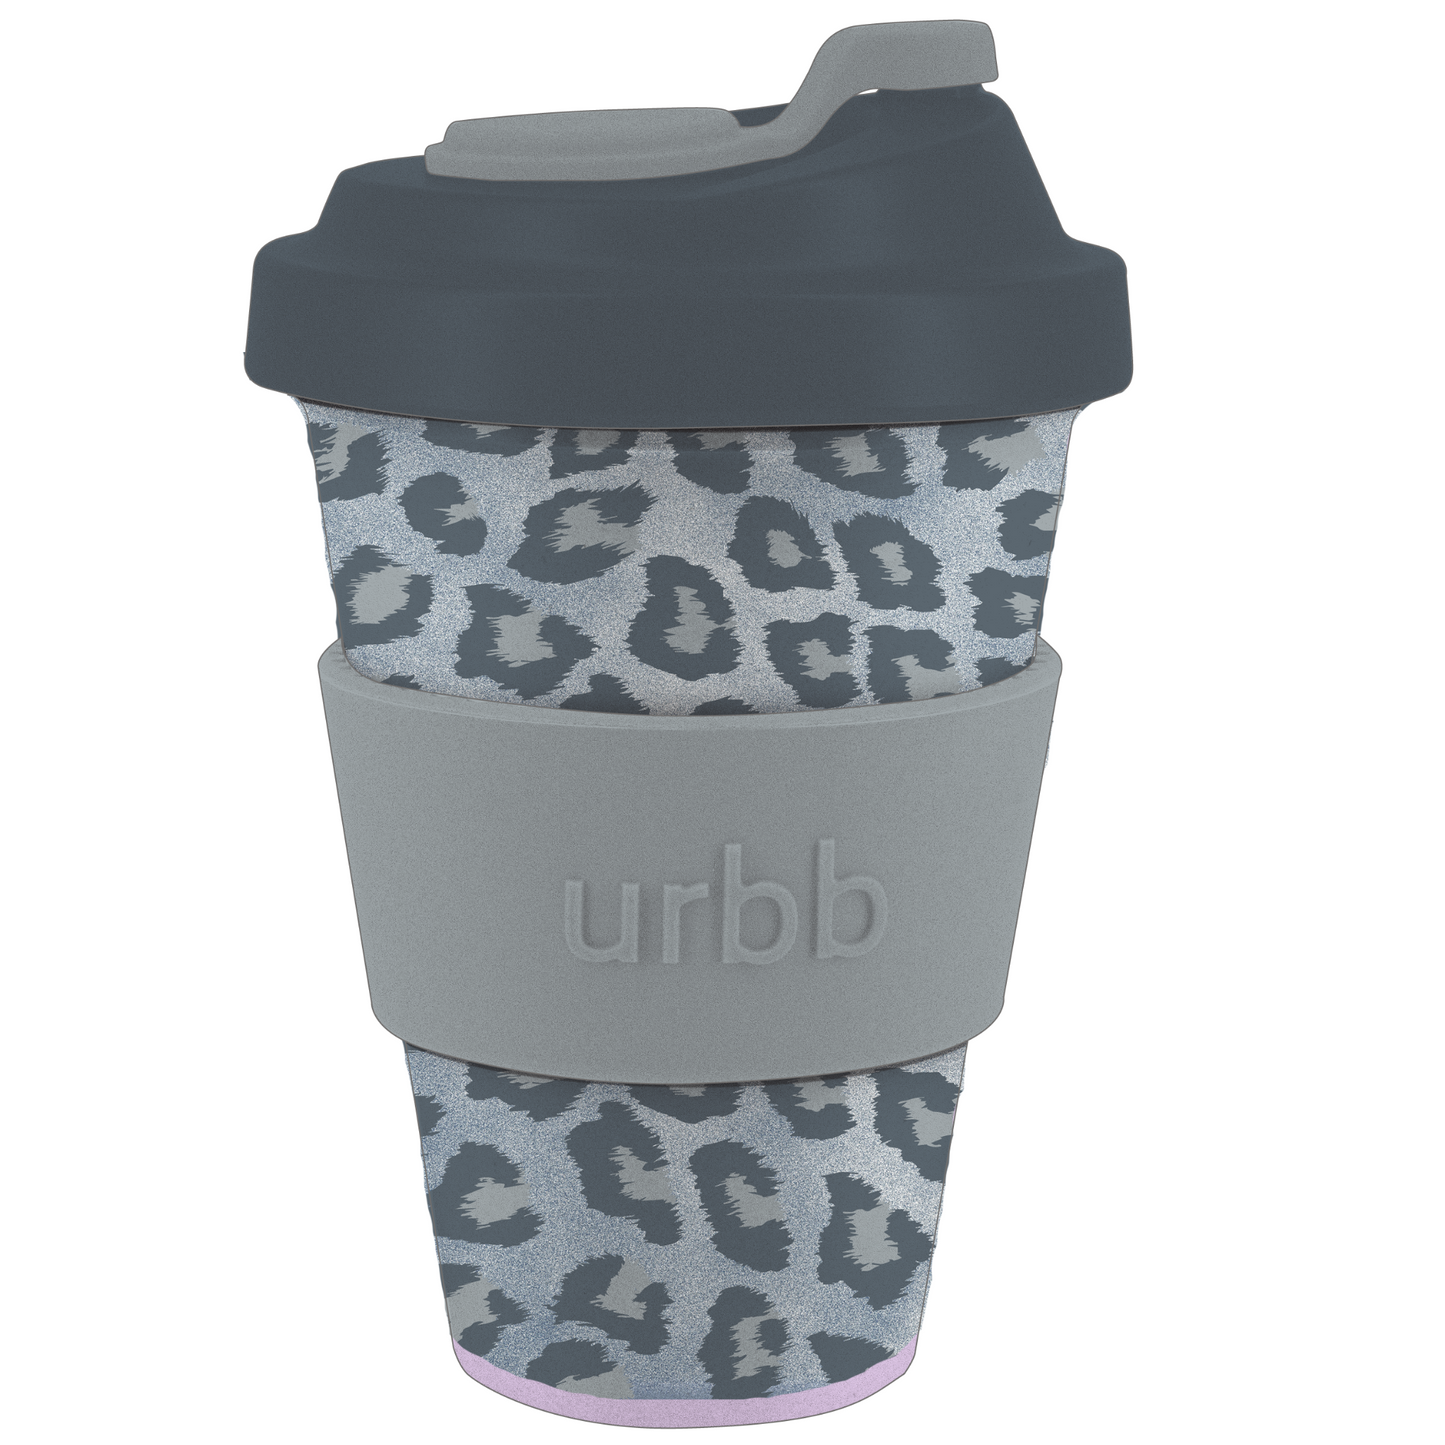 PORTER GREEN - Reusable Coffee Urbb Cup | Almaty